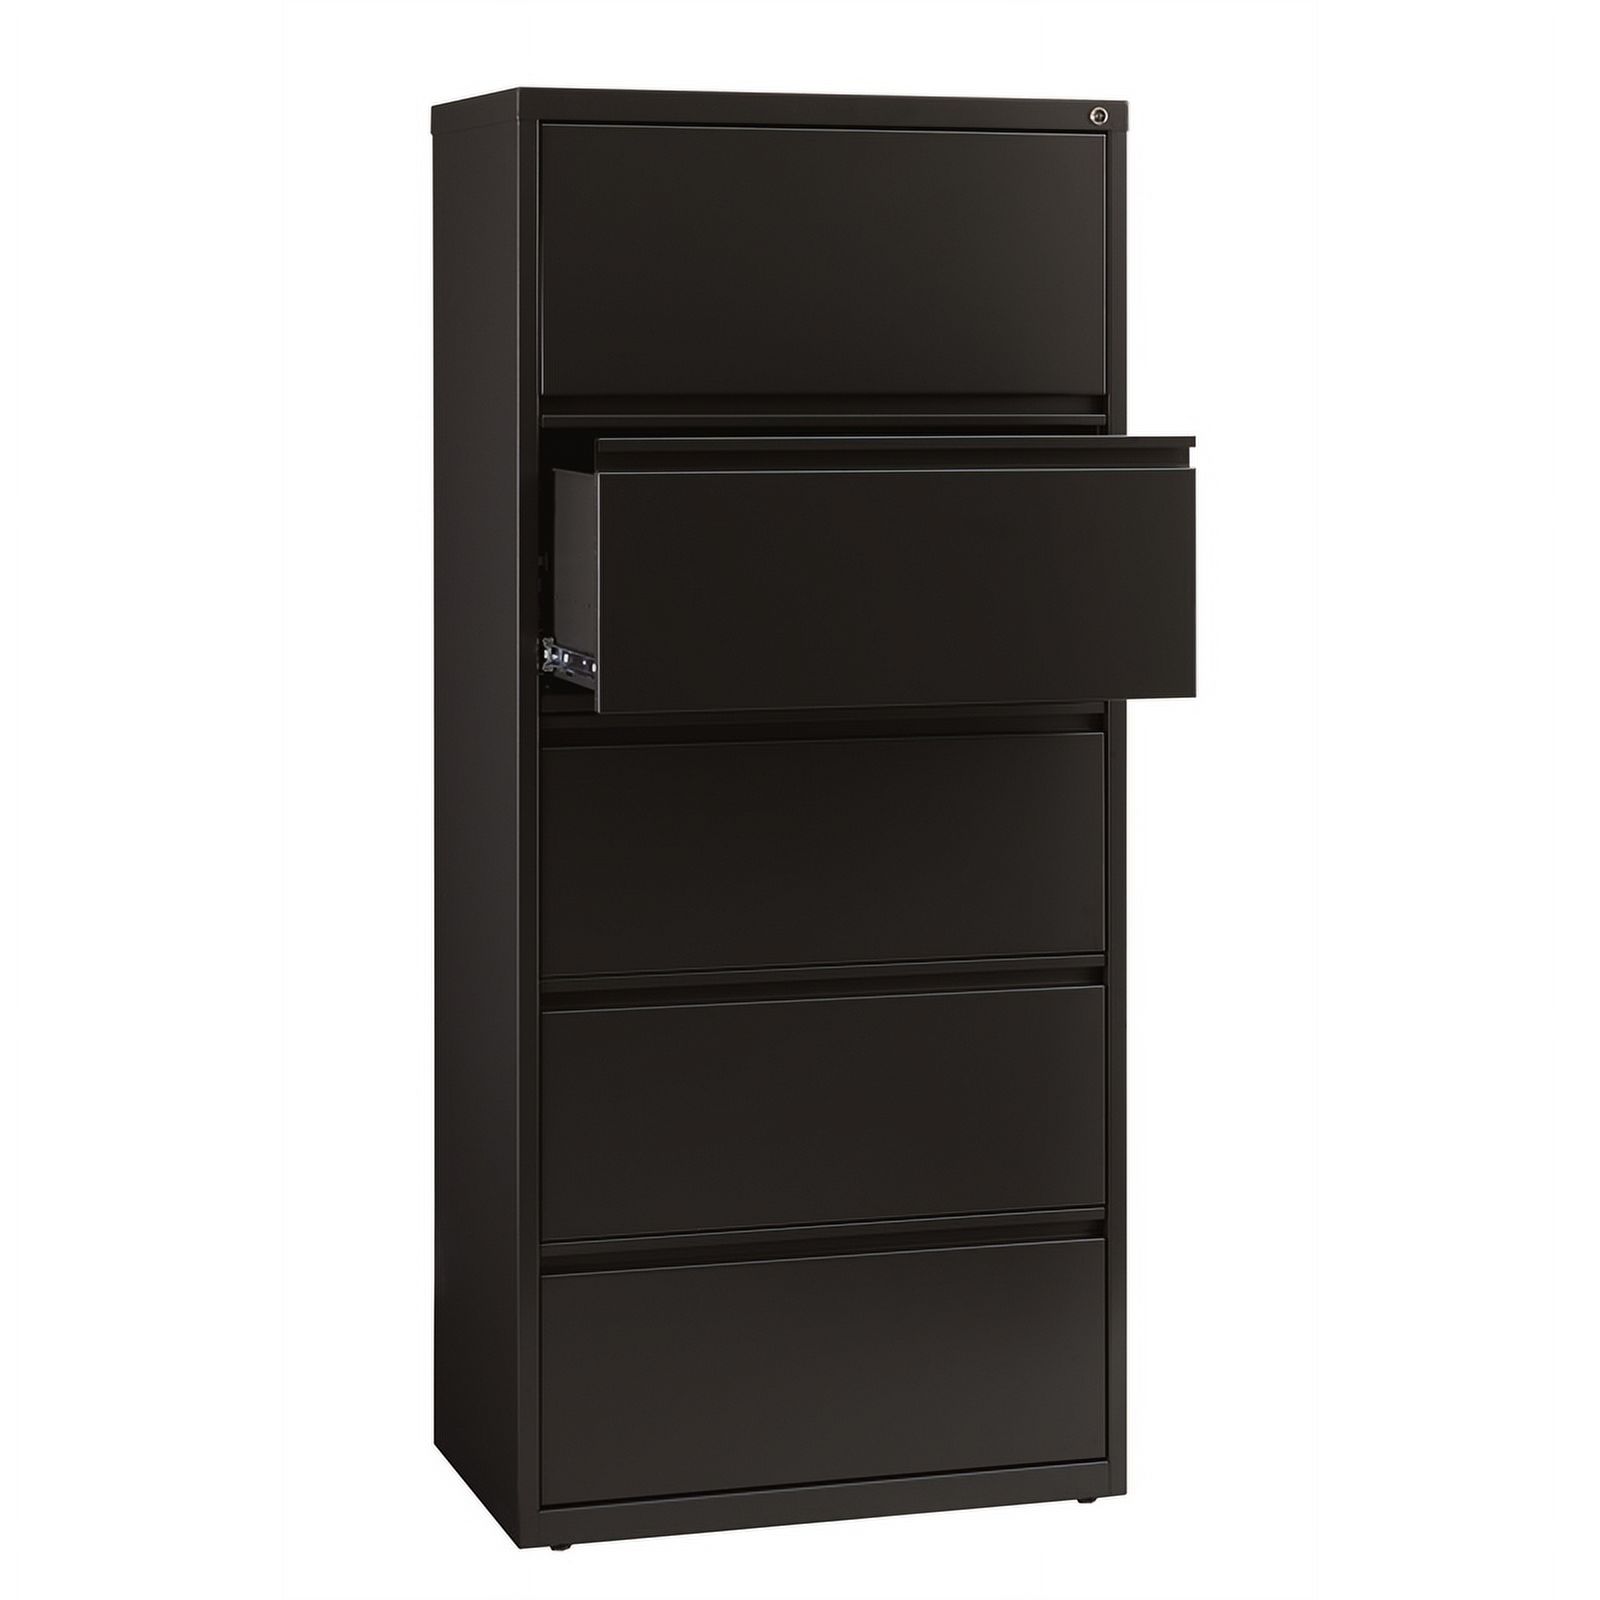 Scranton & Co 30" 5-Drawer Modern Metal Lateral File Cabinet in Black - image 3 of 6